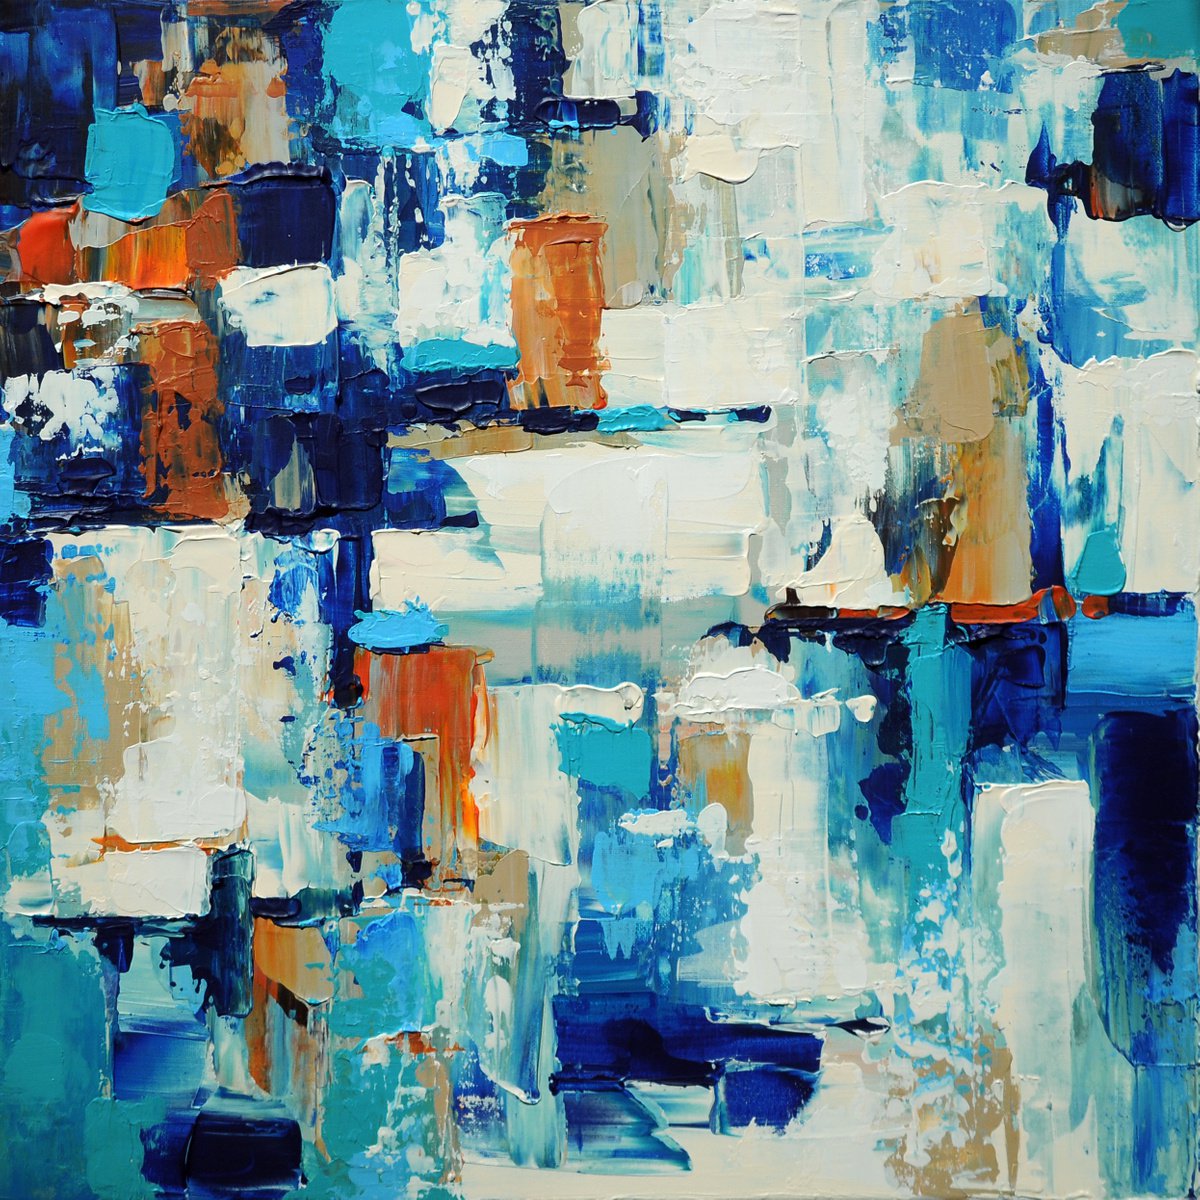 REFLECTION. Blue Abstract (Part II) by Liubov Kvashnina